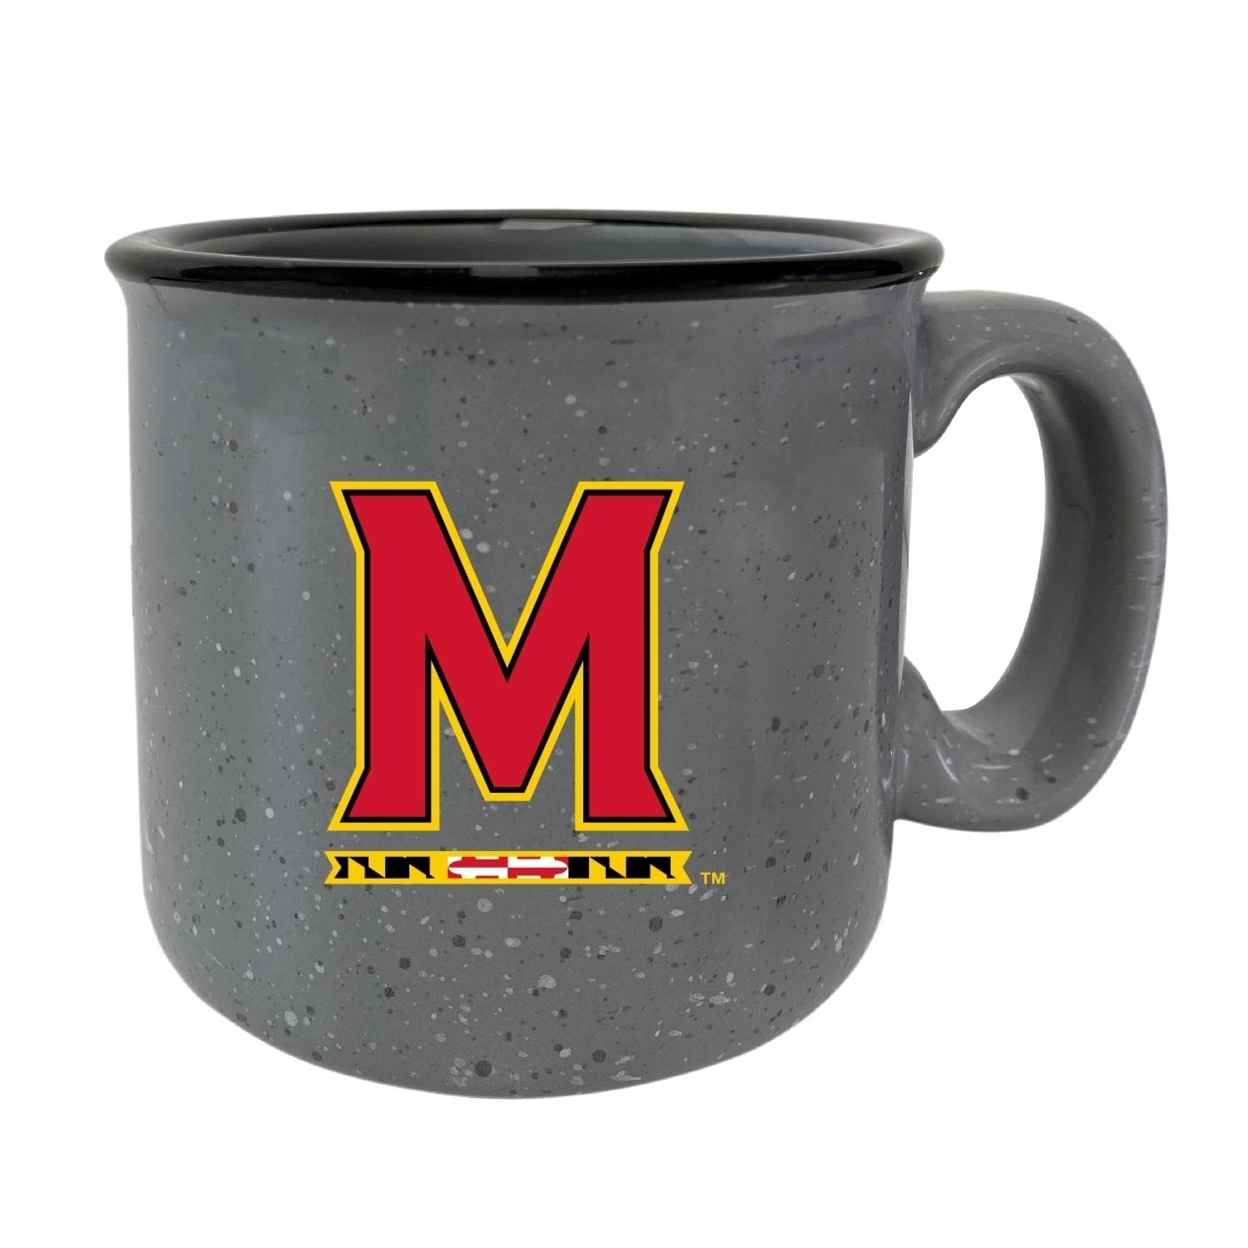 Maryland Terrapins Speckled Ceramic Camper Coffee Mug - Choose Your Color - Gray